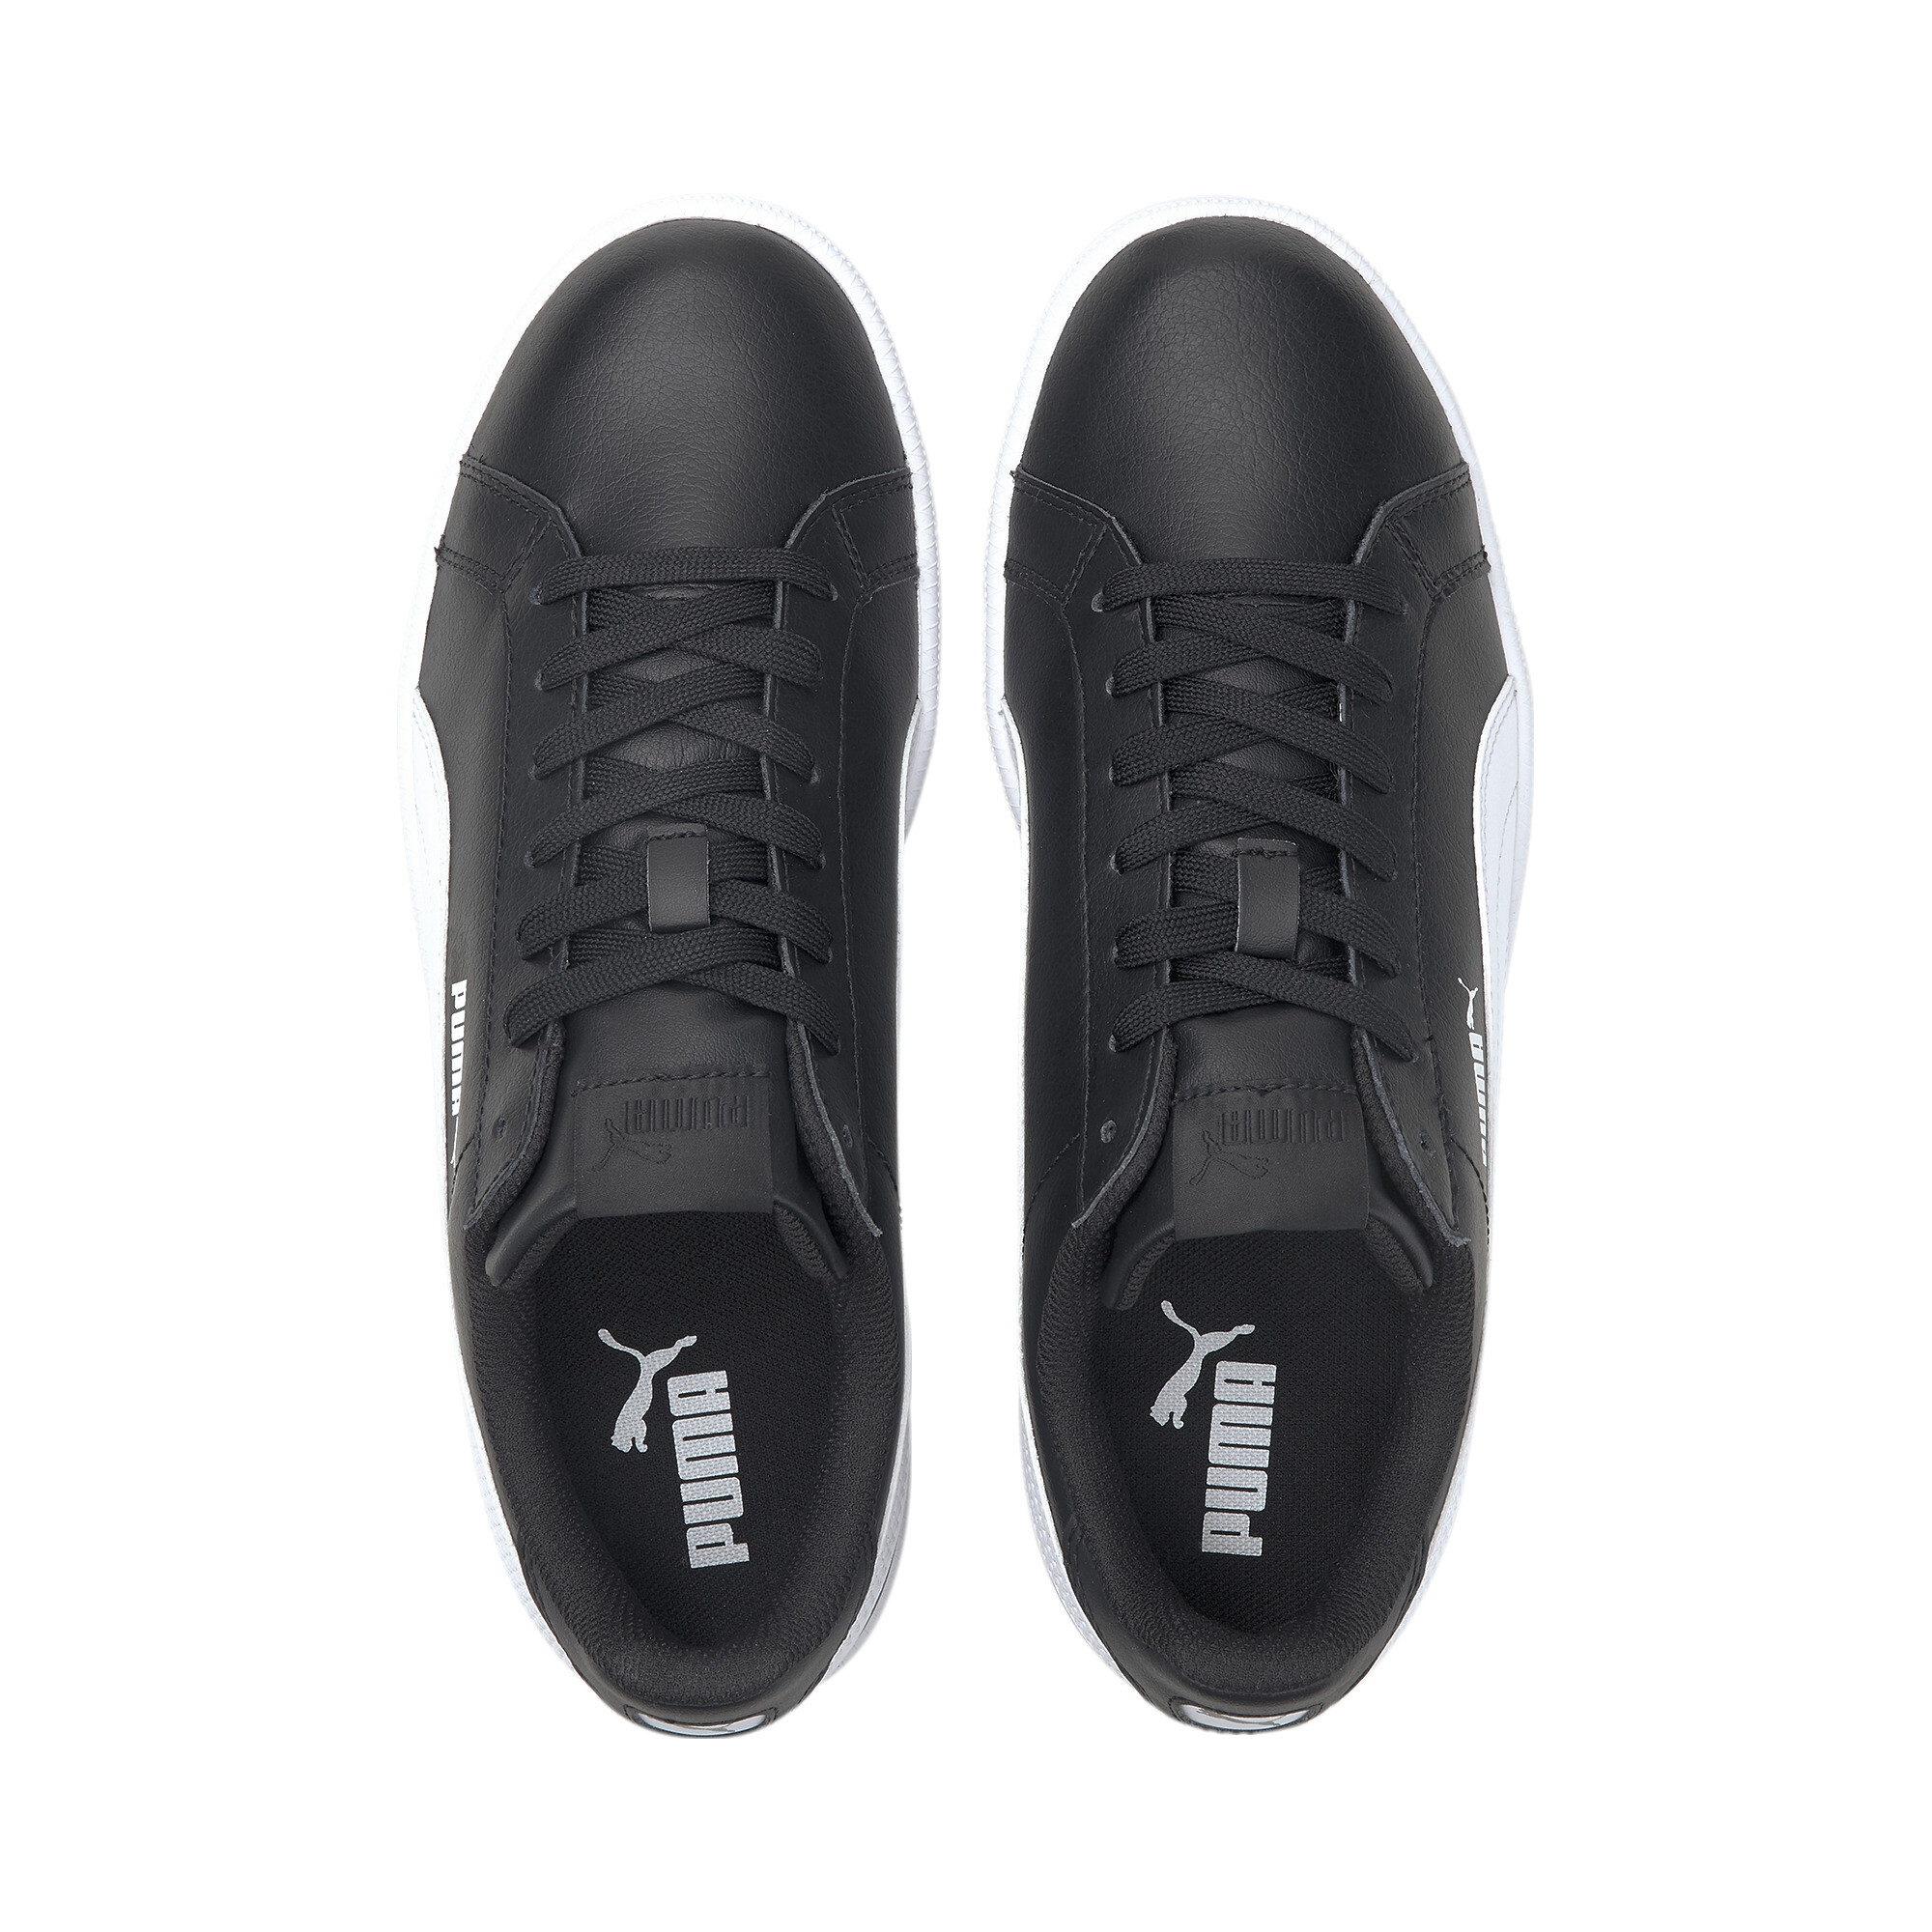 Indexbild 36 - PUMA Smash Trainers Schuhe Sneakers Sport Classics Unisex Neu